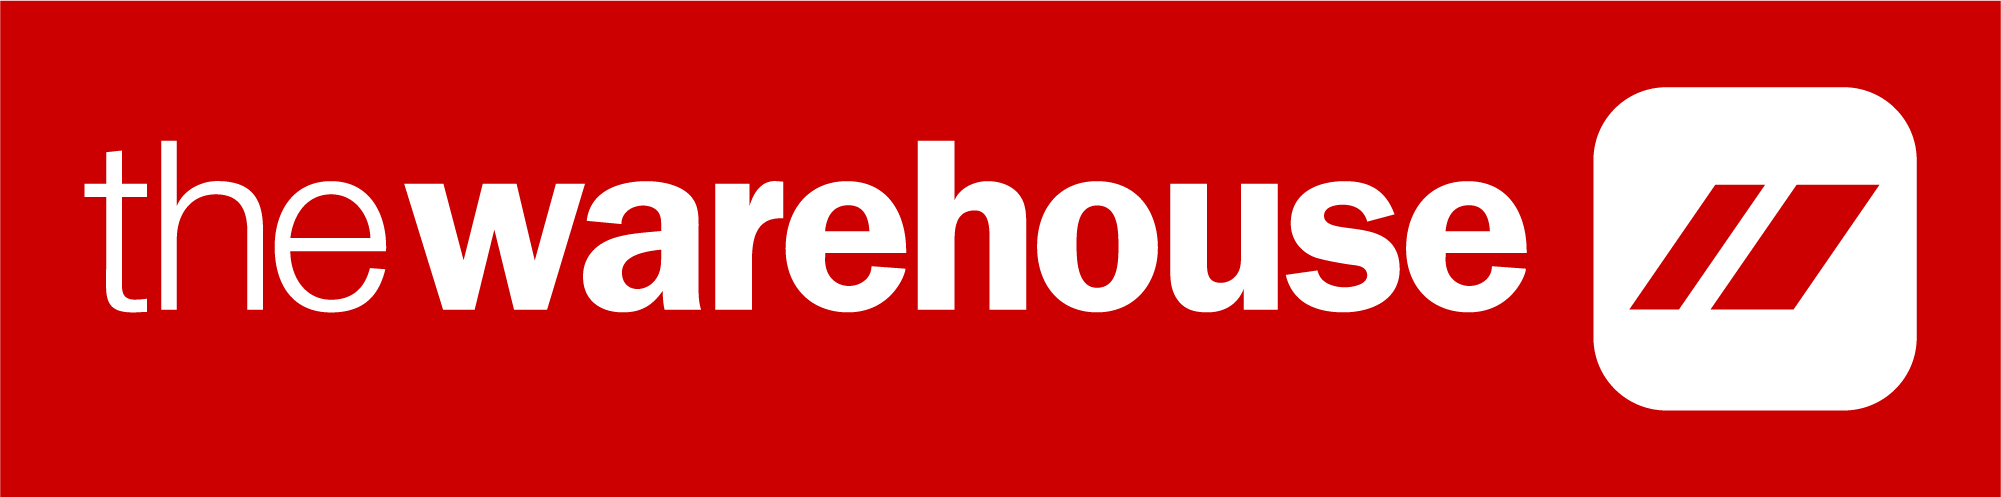 thewarehouse_red_background_logo